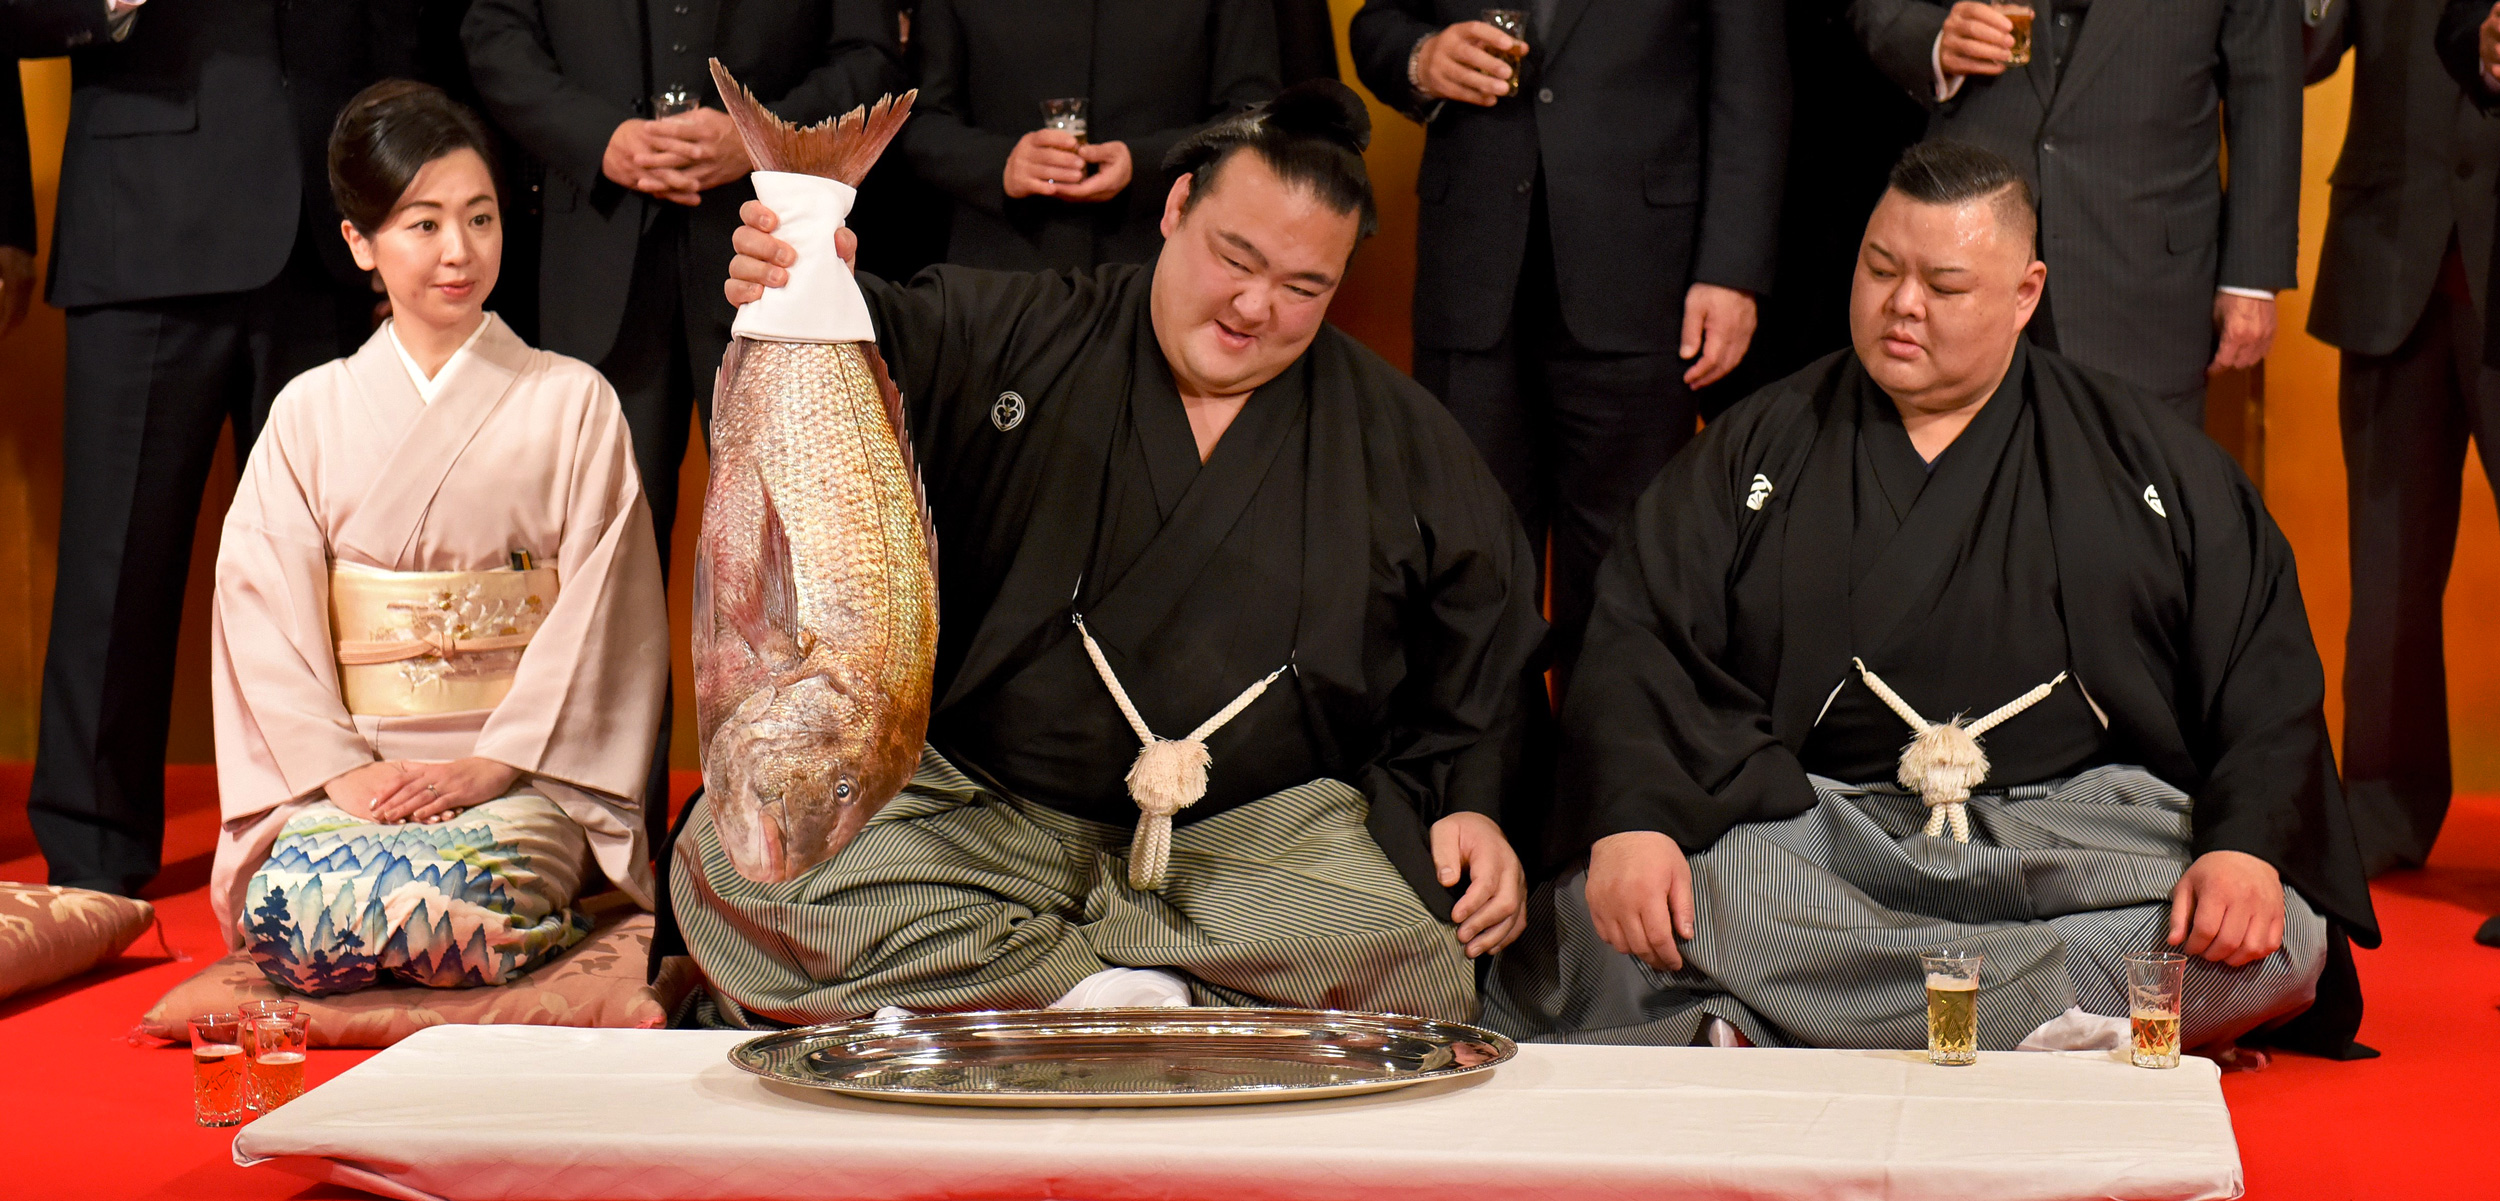 sumo wrestler Kisenosato Yutaka holds up a red seabream